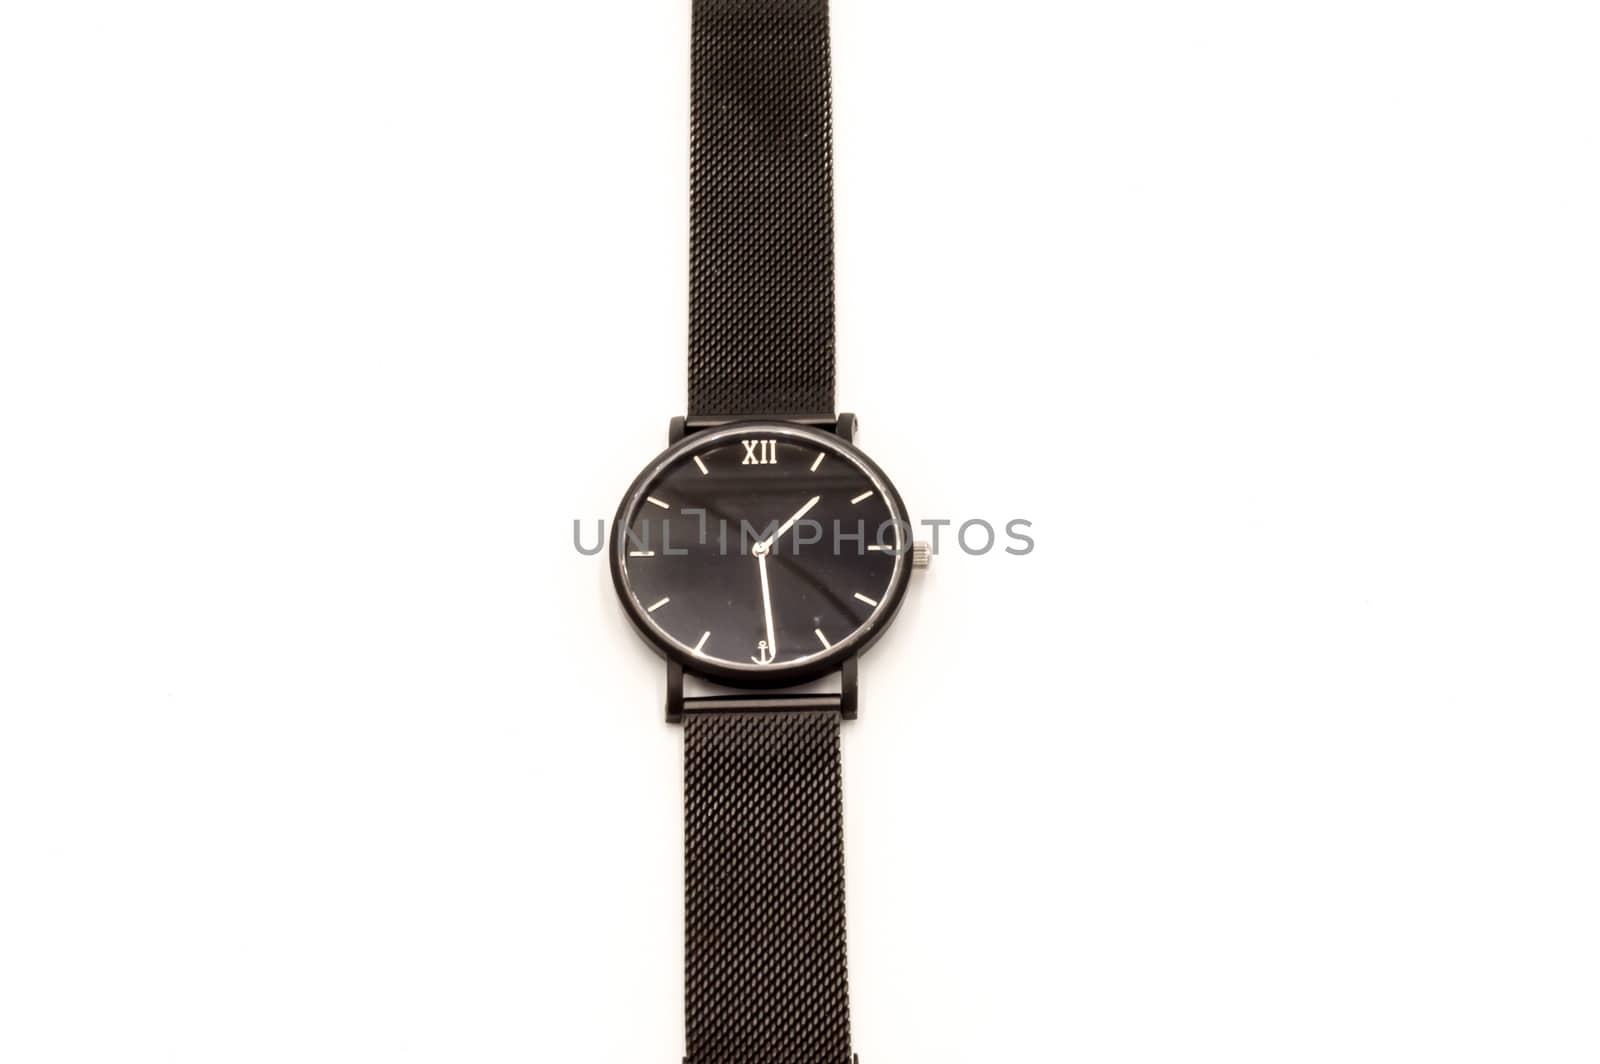 Classic black analog wristwatch  by Philou1000